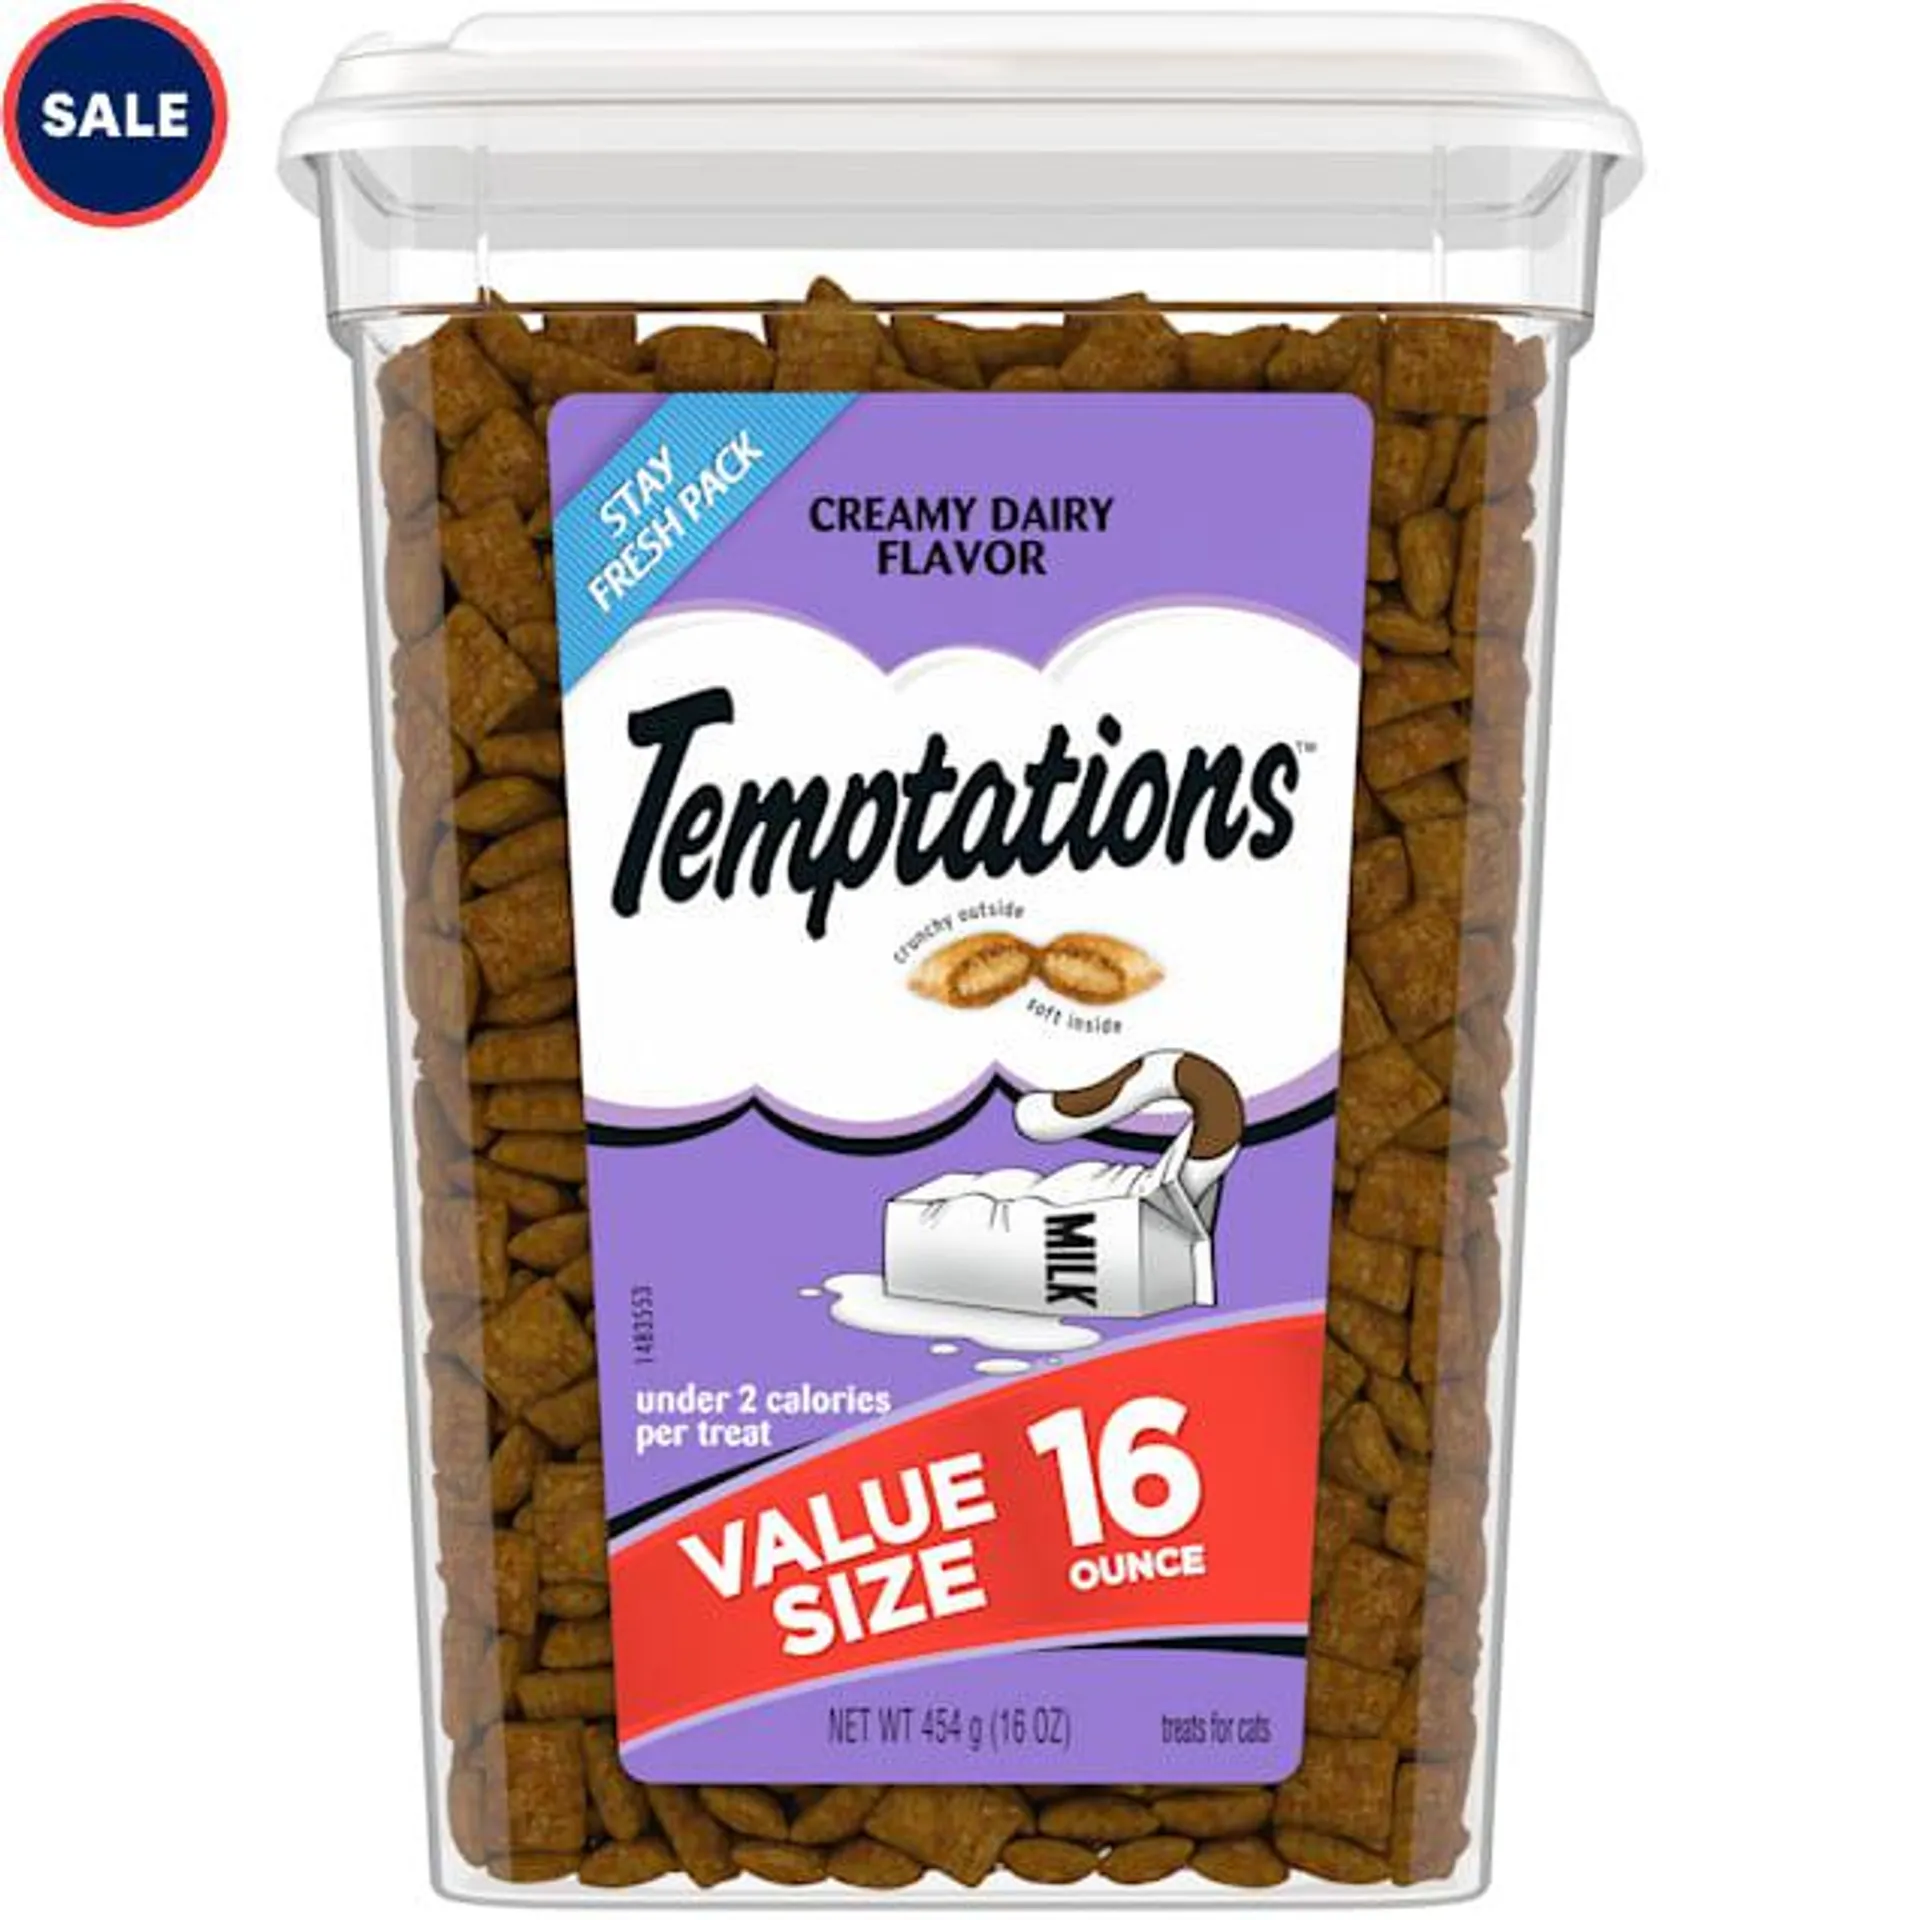 Temptations Classics Creamy Dairy Flavor Crunchy and Soft Cat Treats, 16 oz.